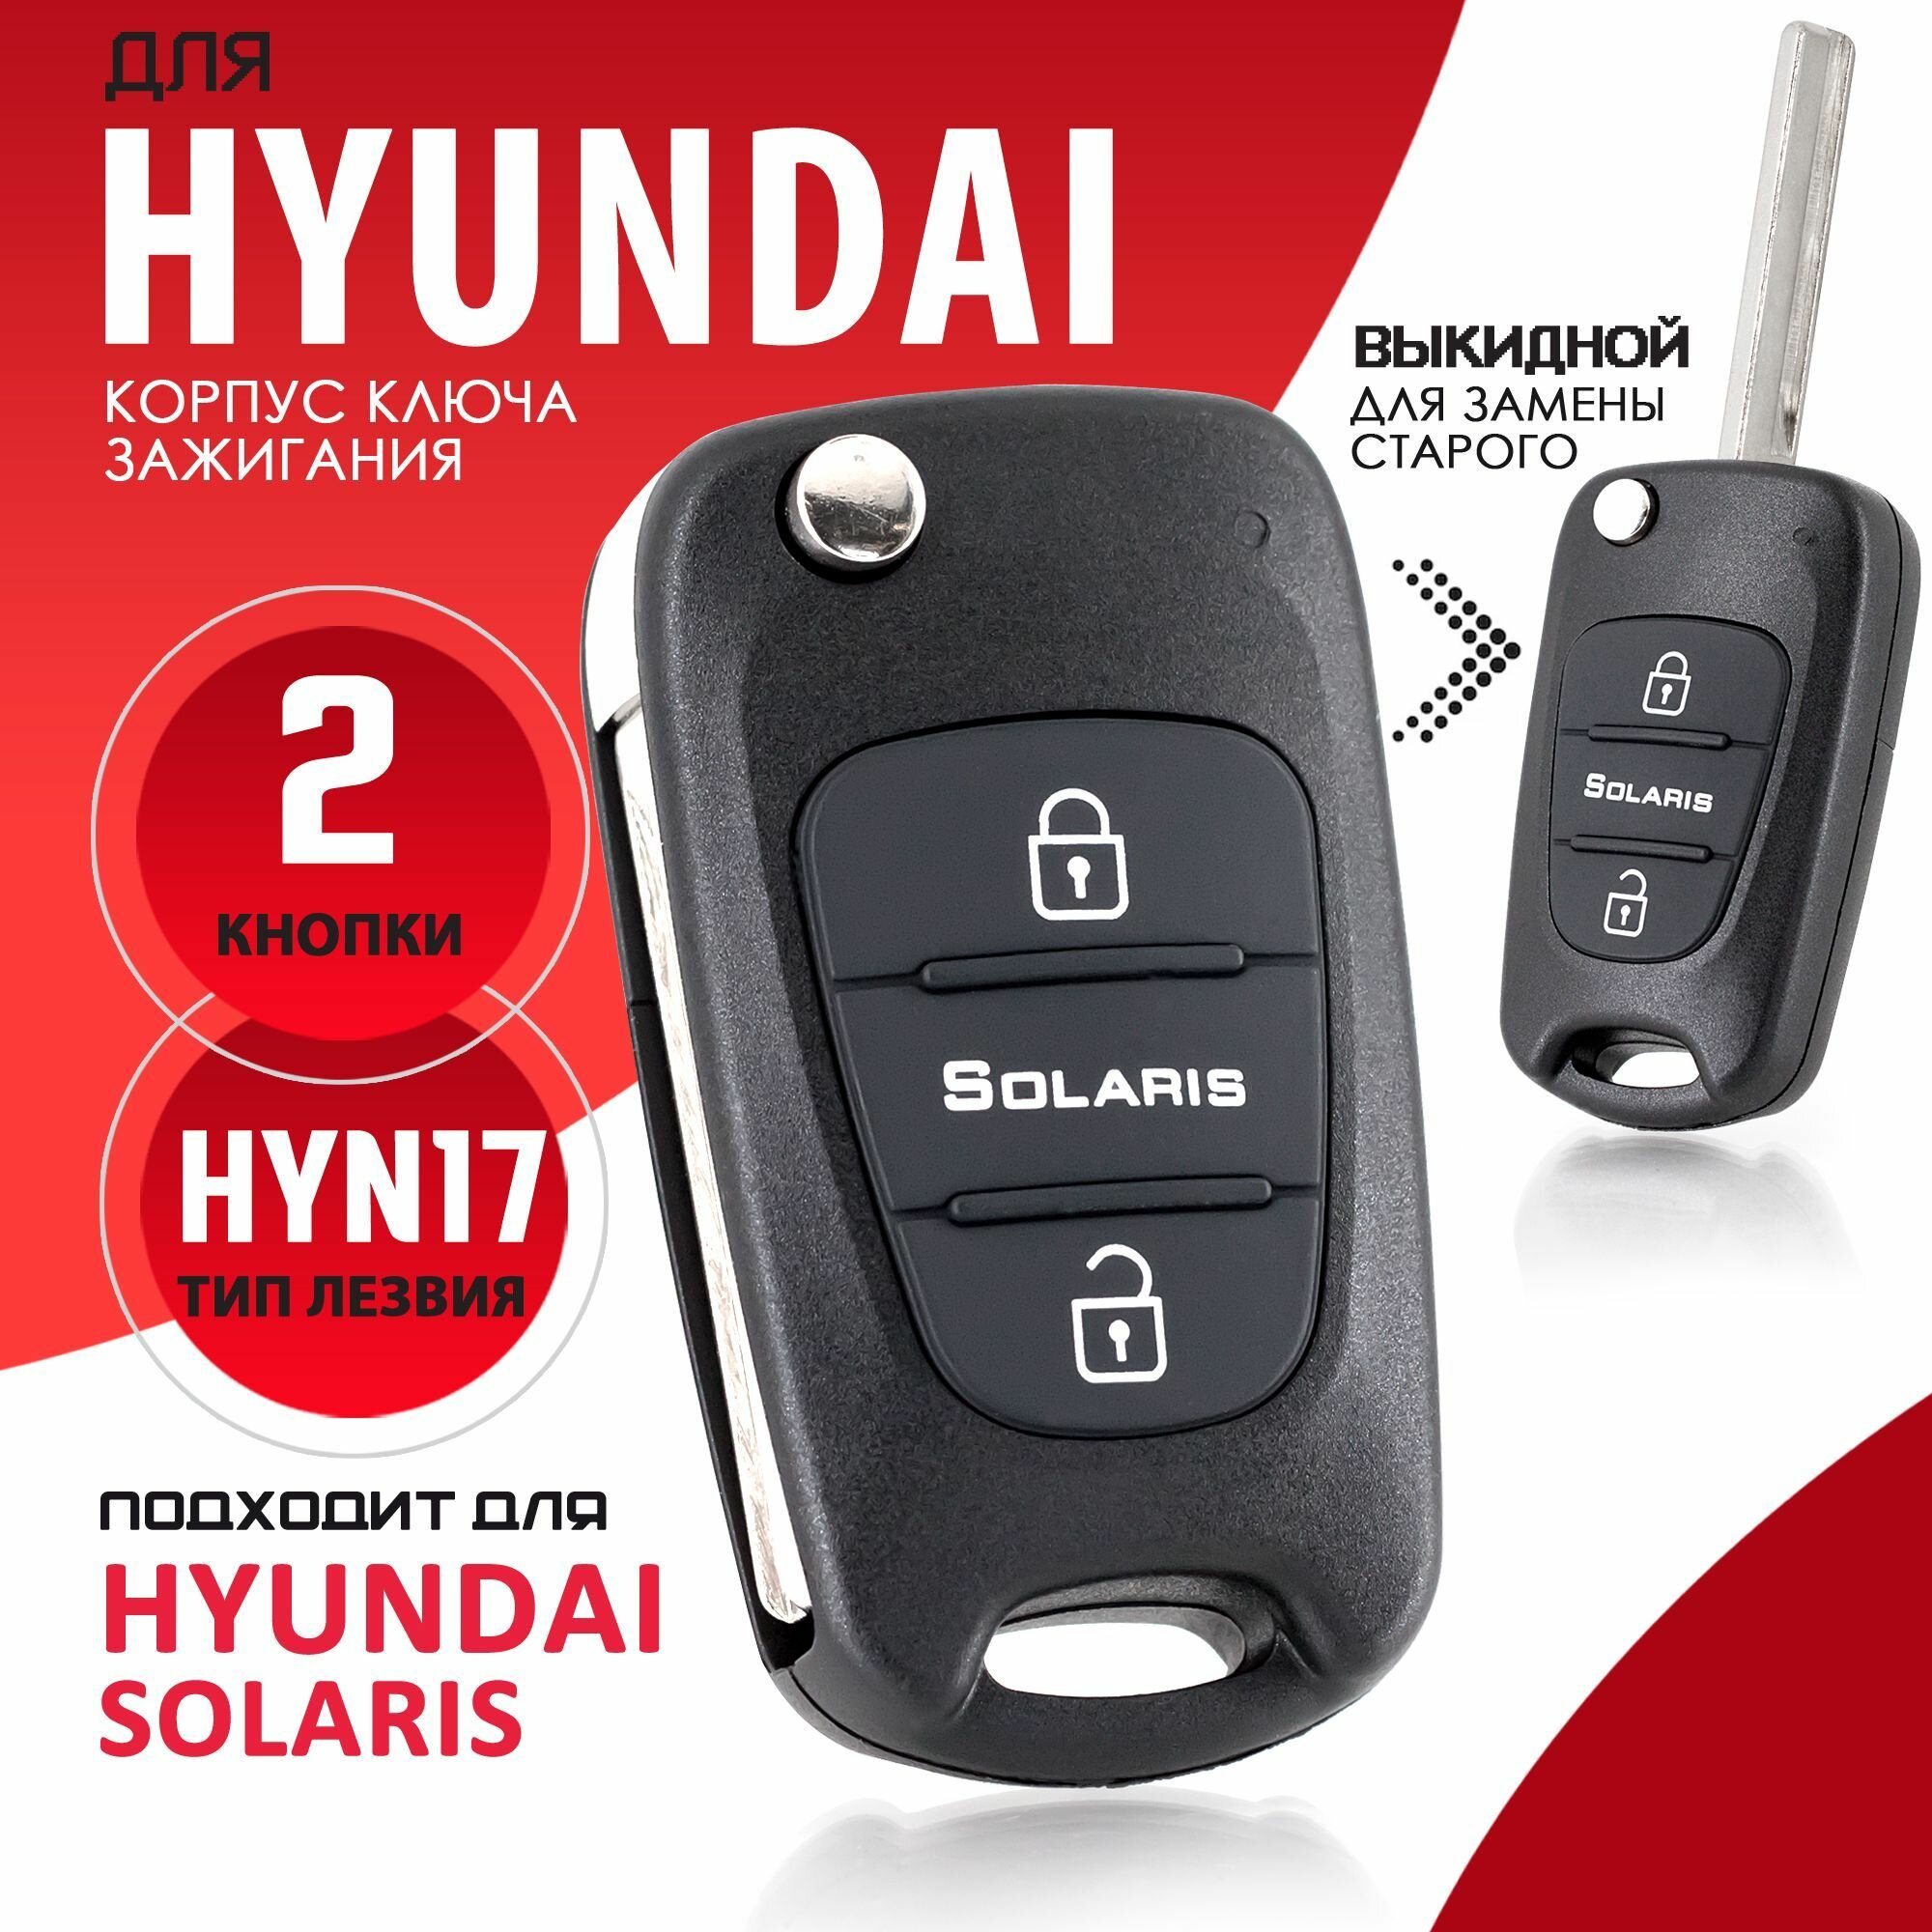 Корпус ключа зажигания для Hyundai Solaris / Хендай Солярис - 1 штука (2х кнопочный ключ) лезвие HYN17